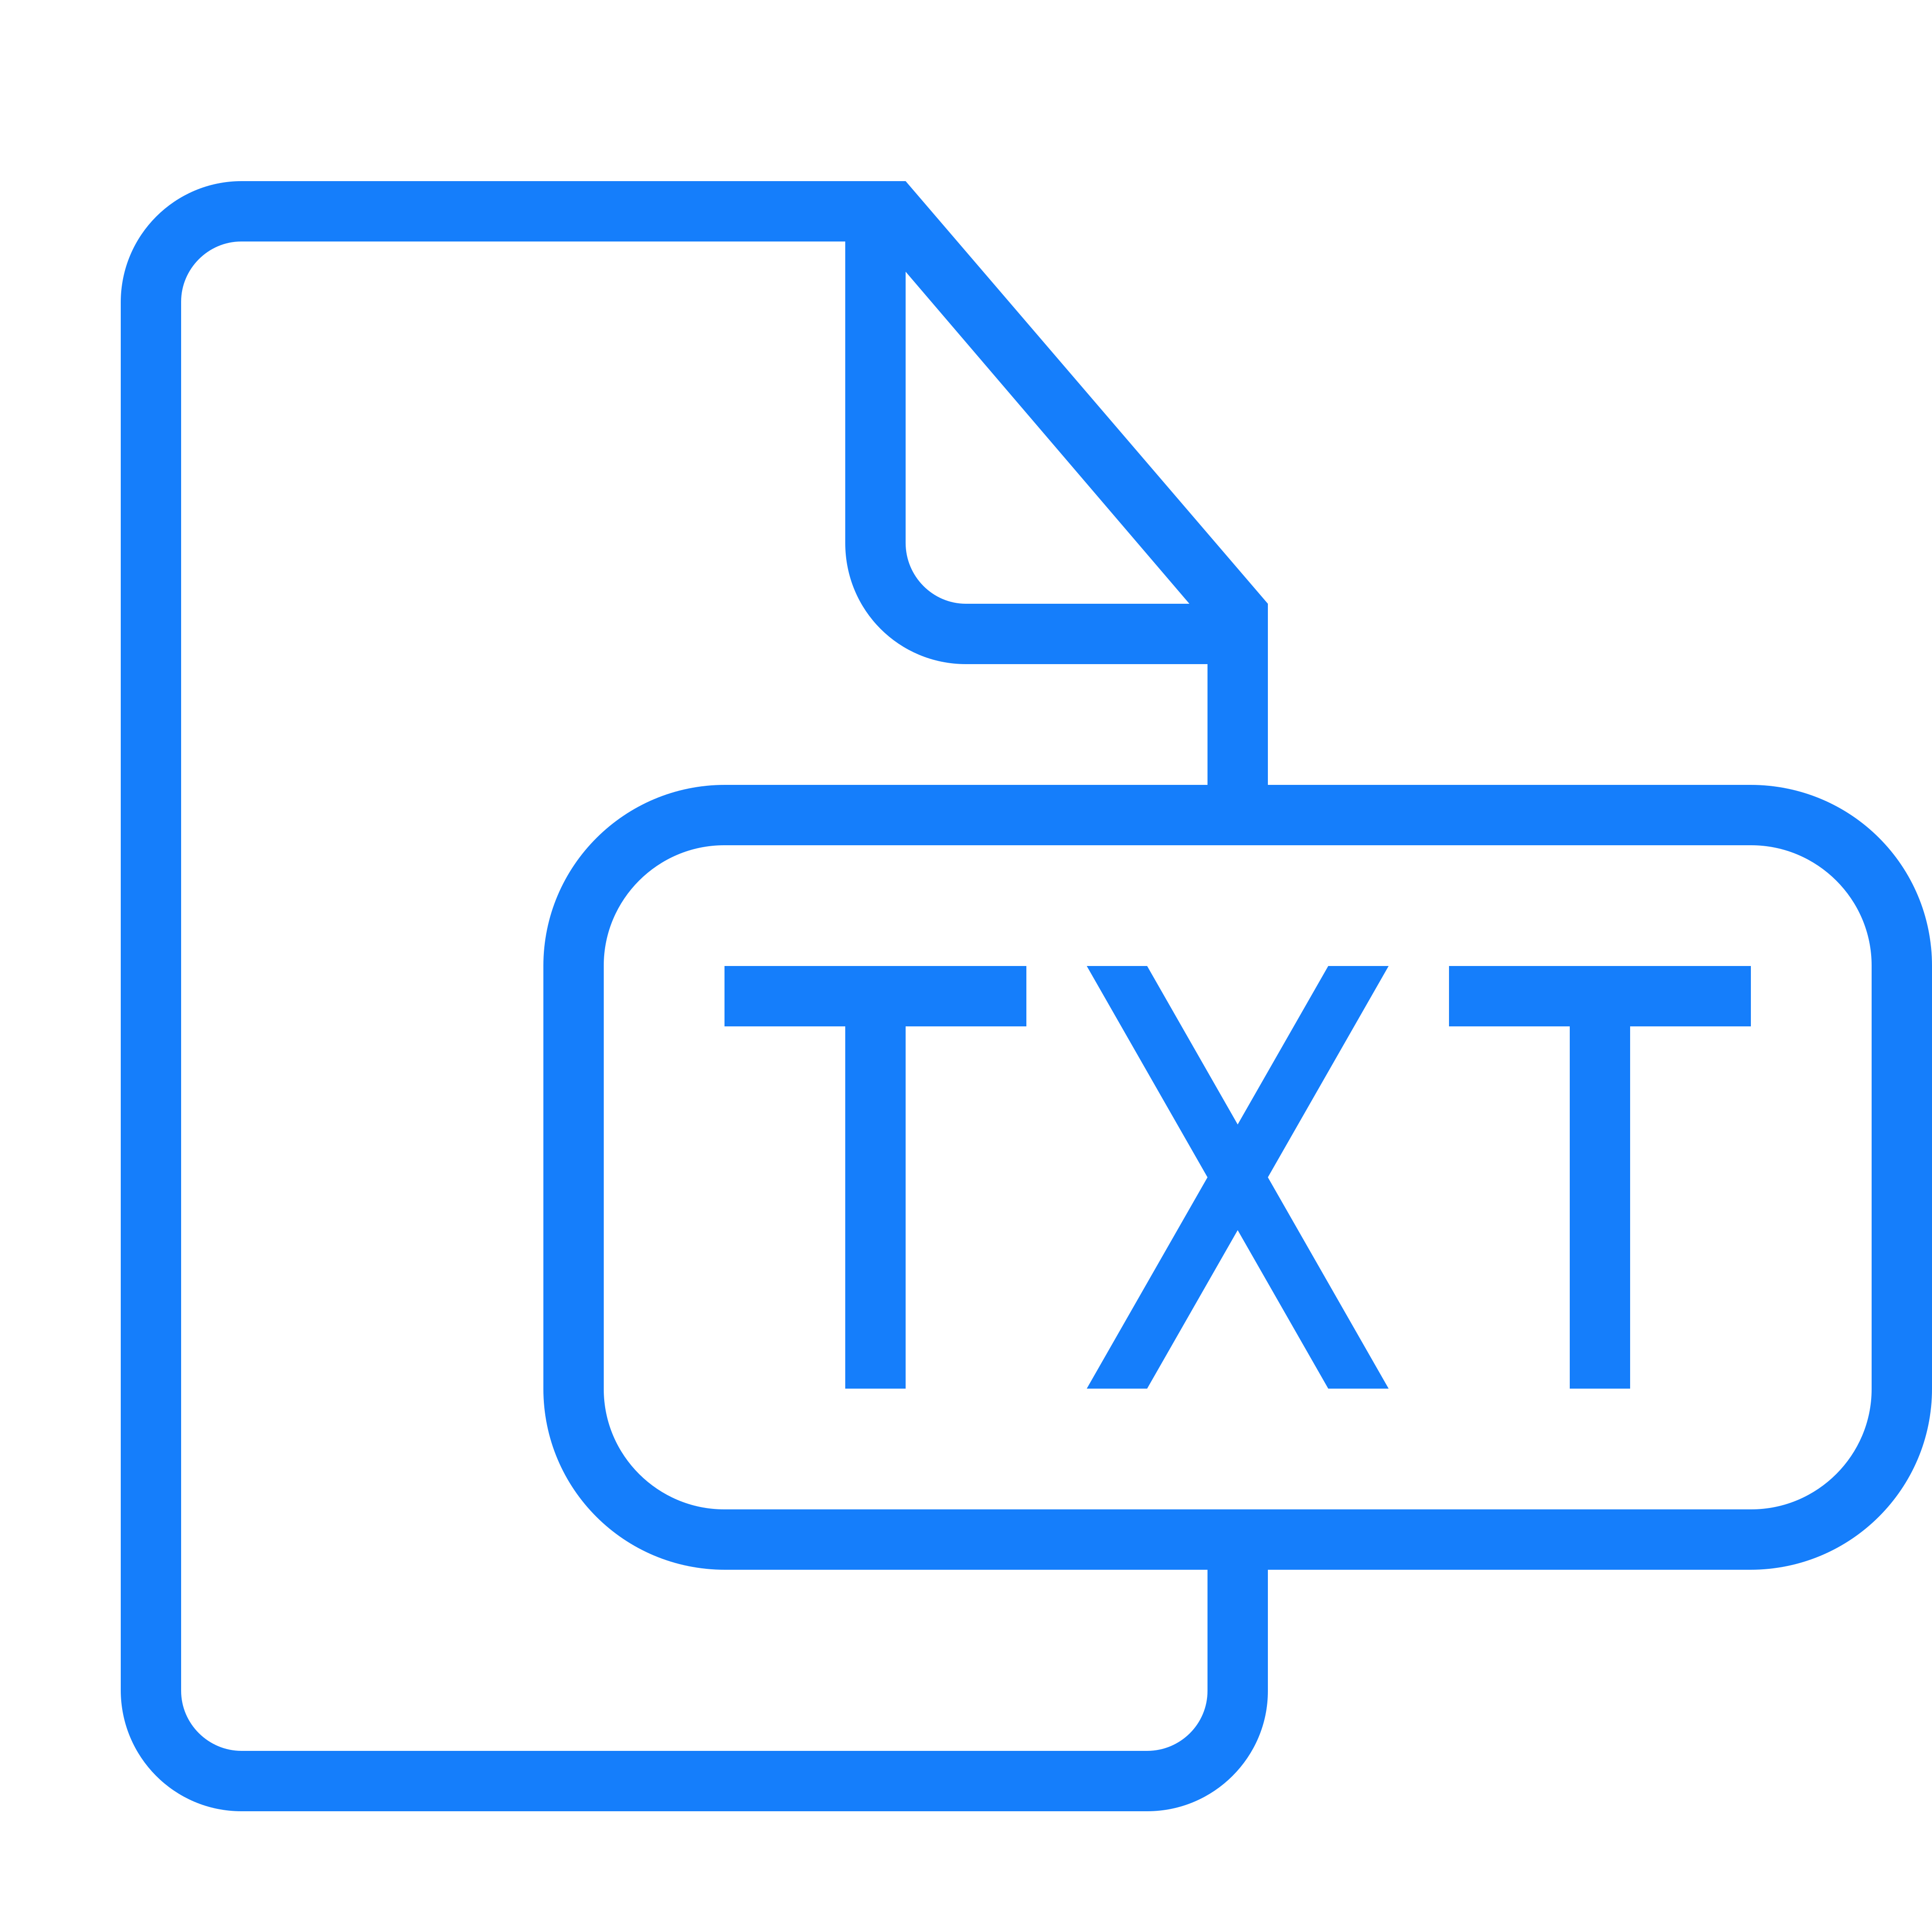 Документ тхт. Иконка txt. Тхт символ. Txt Формат. Значок XML.